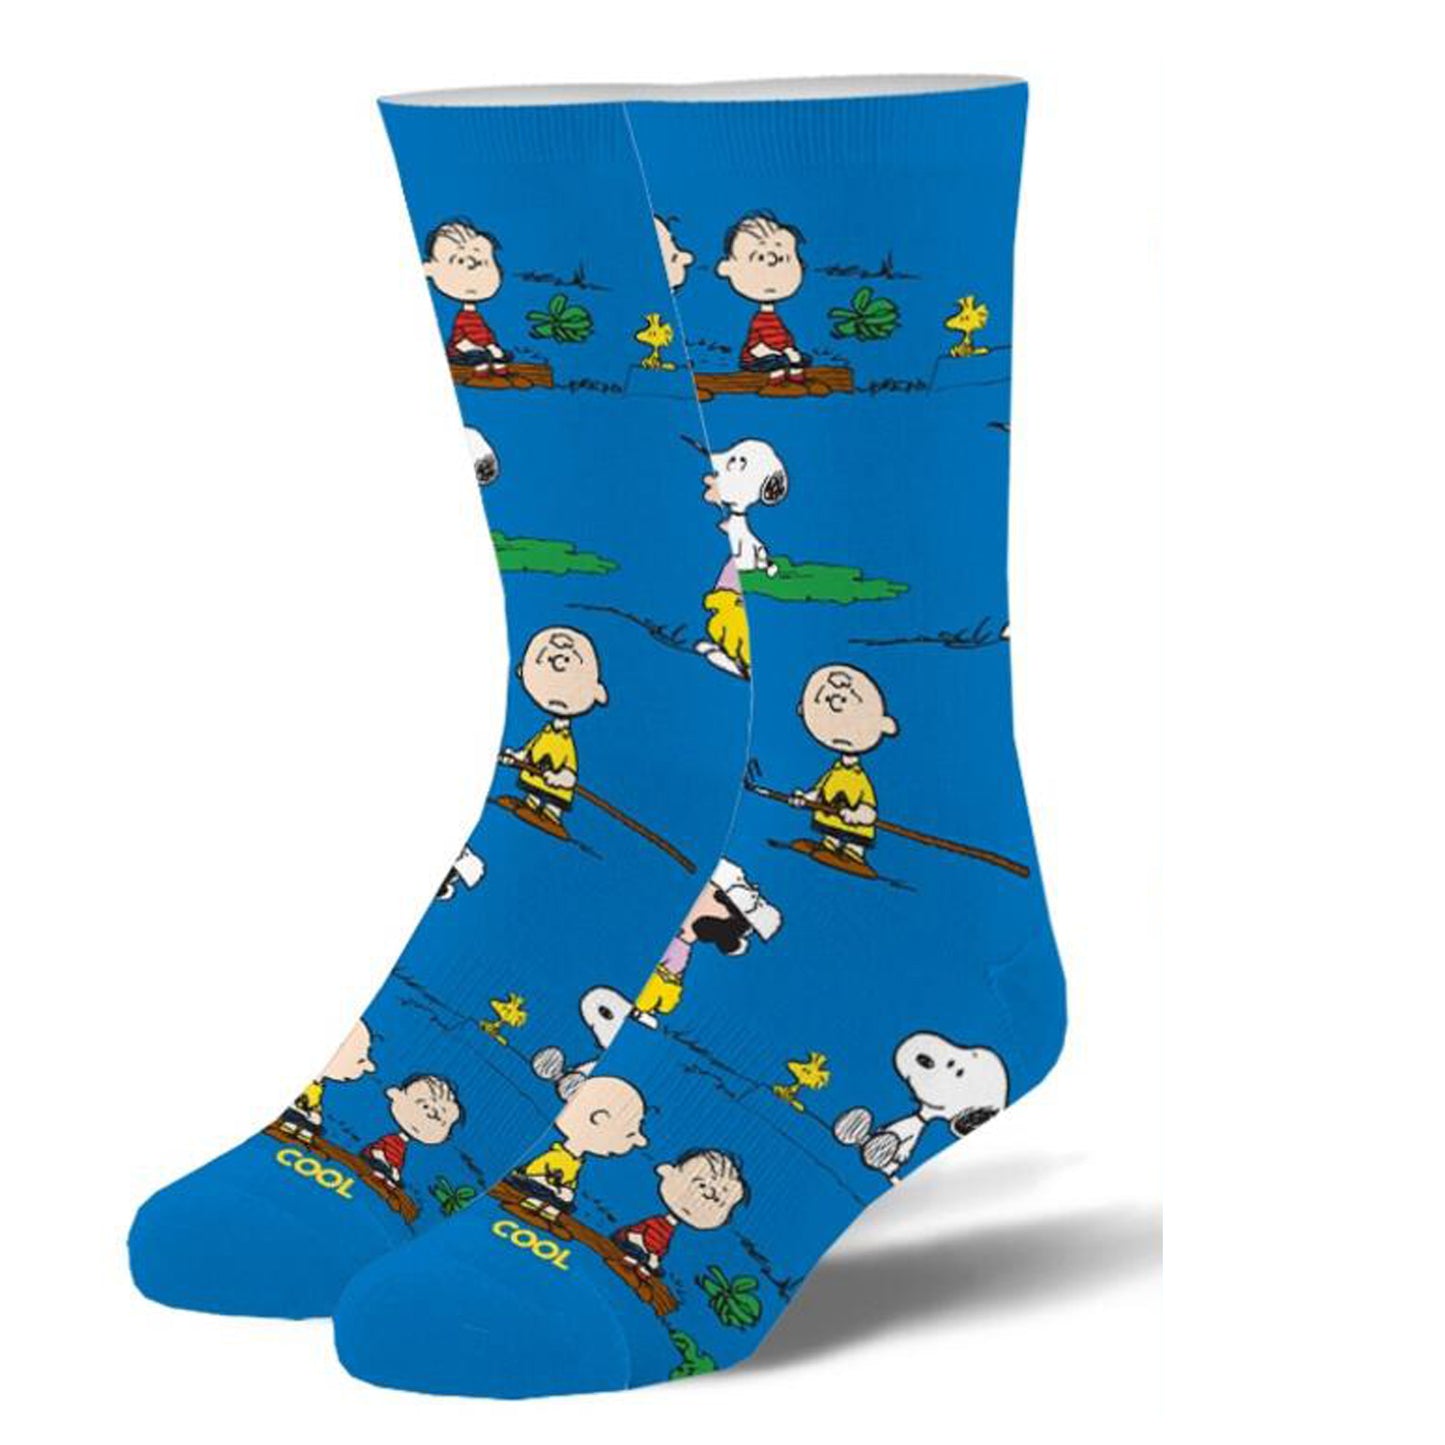 Cool Socks Men's Crew Socks - Charlie & The Outdoors (Peanuts)